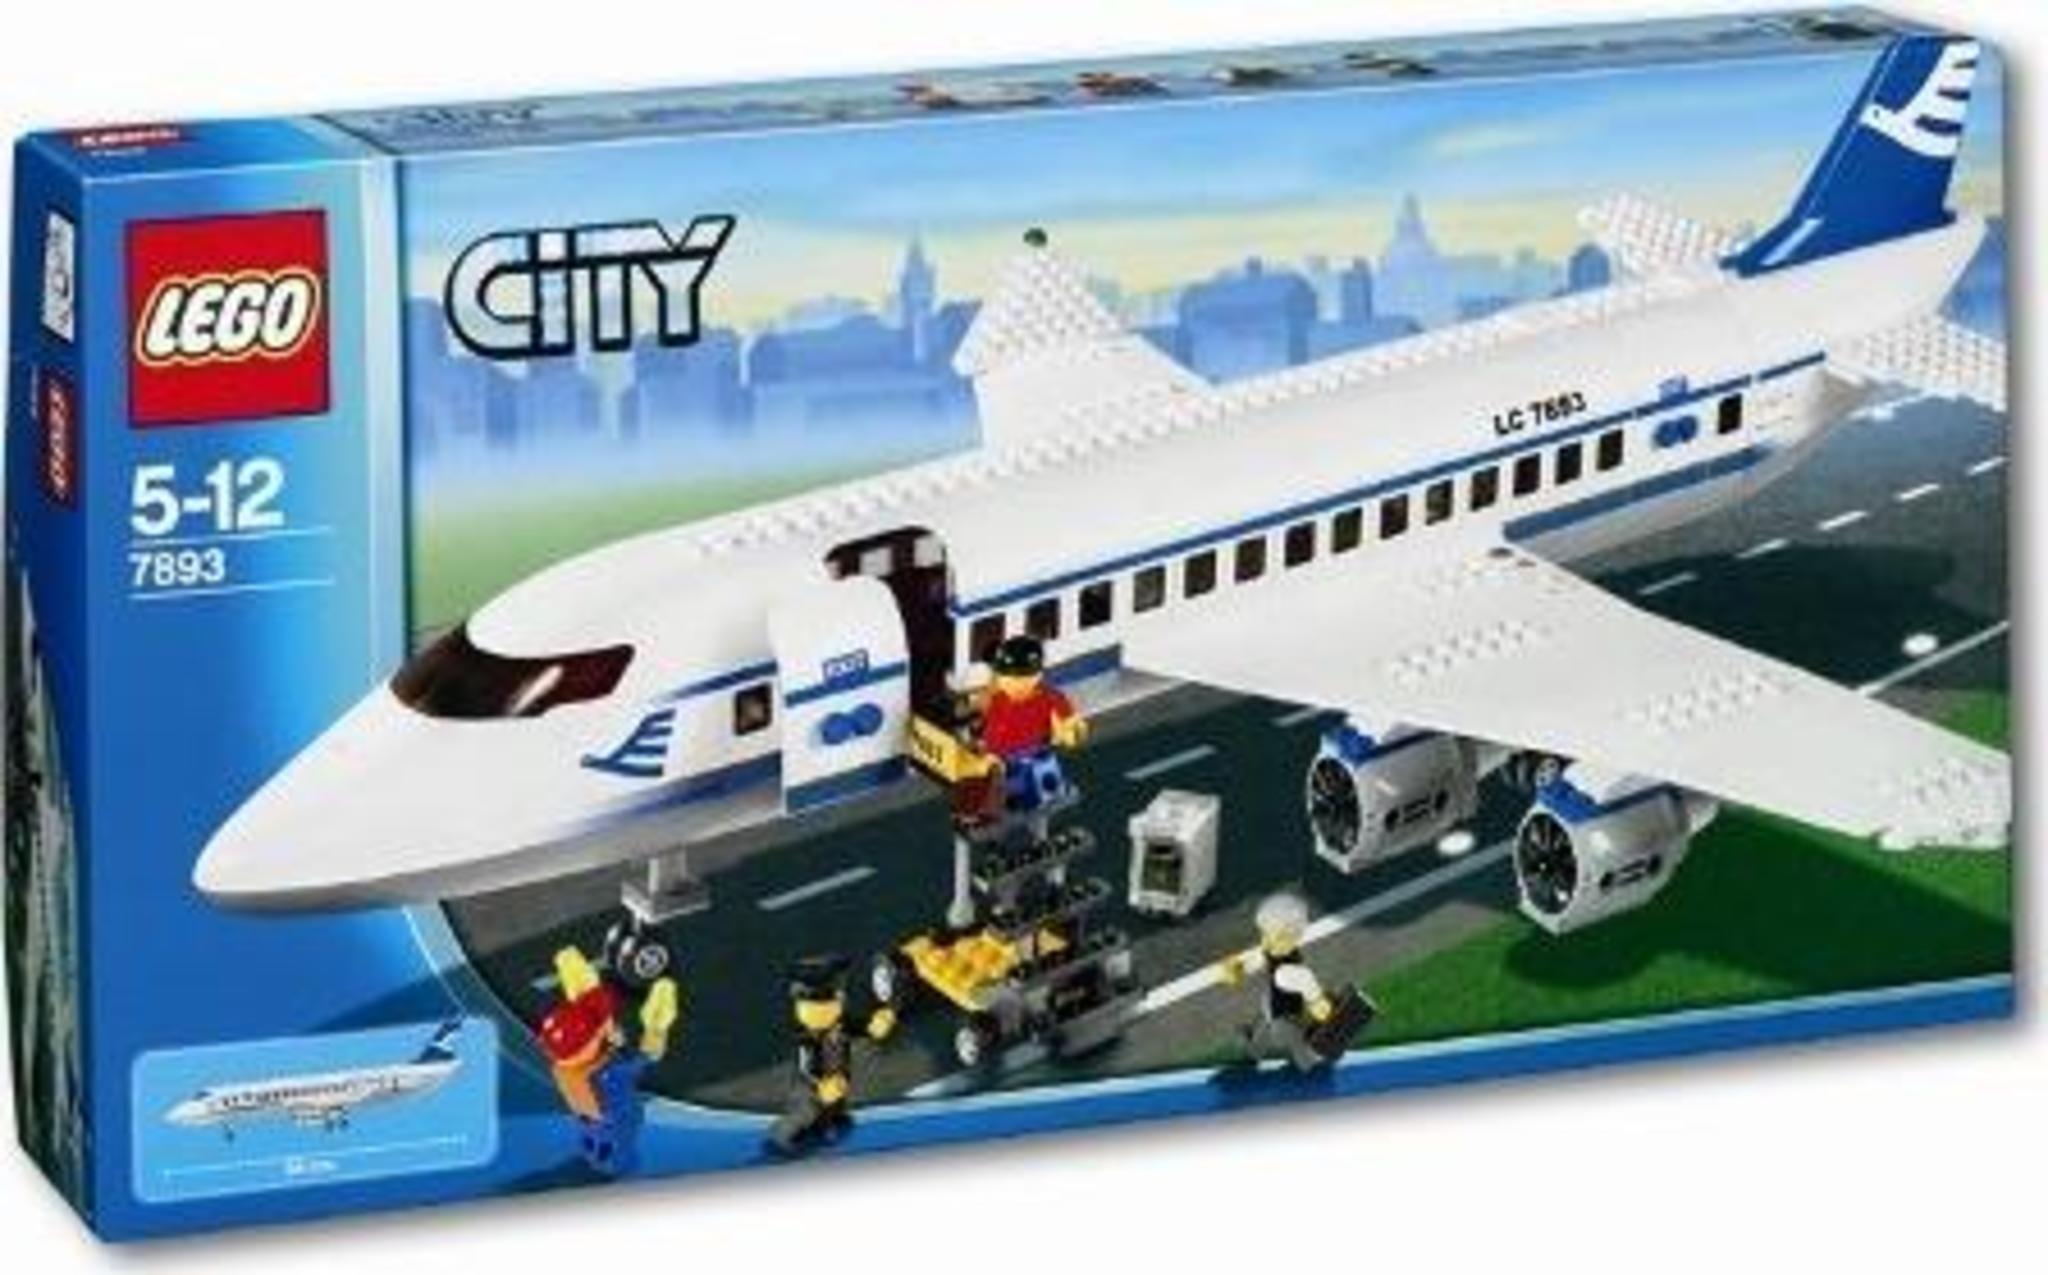 LEGO City 7893 - Aereo Passeggeri